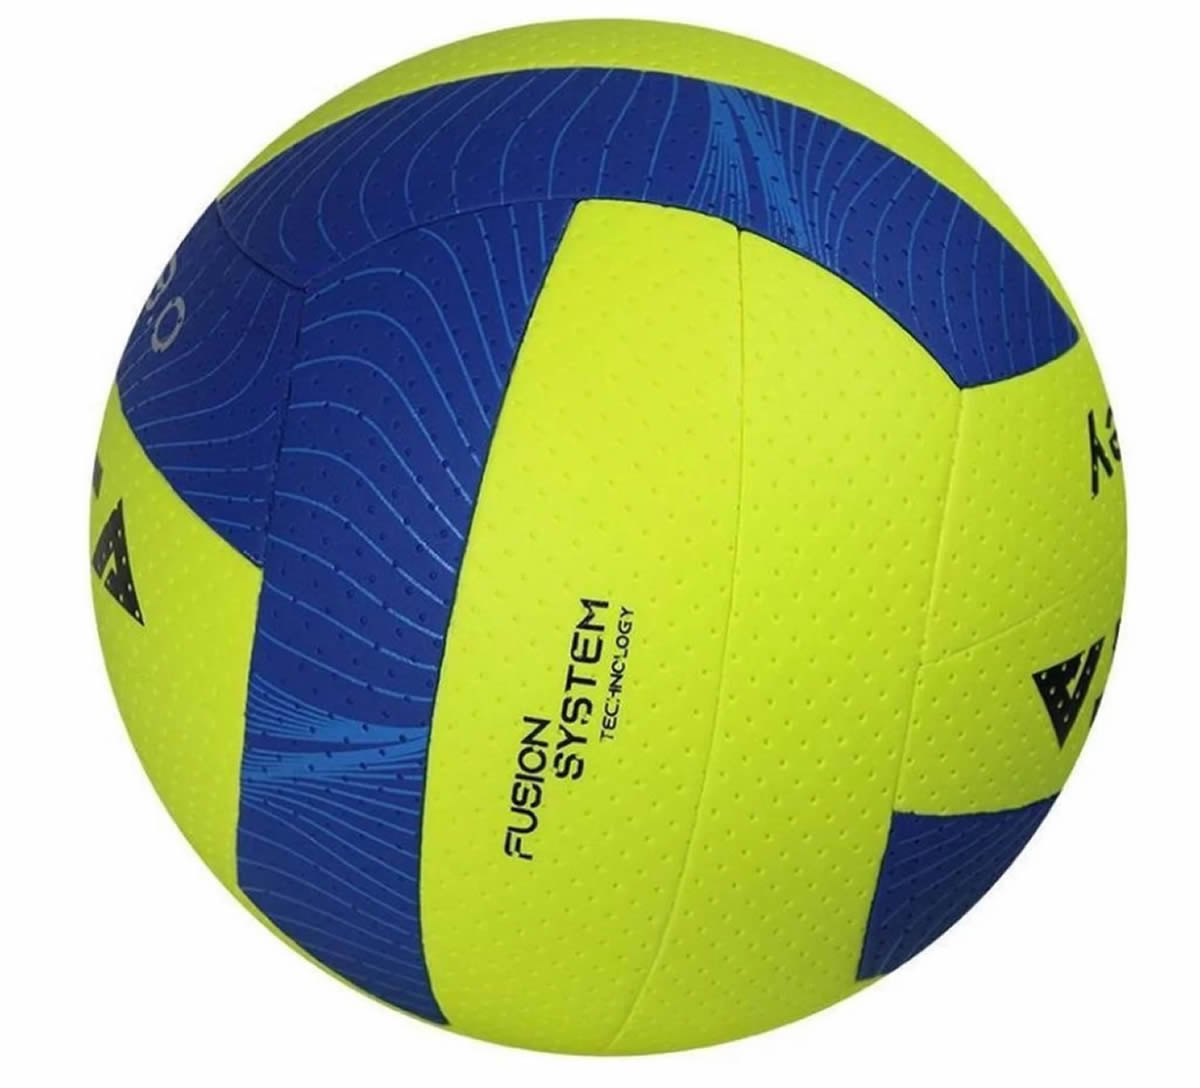 Bola de Volei Pro 8.0 - Soft - Profissional - Finta - Loja do Competidor